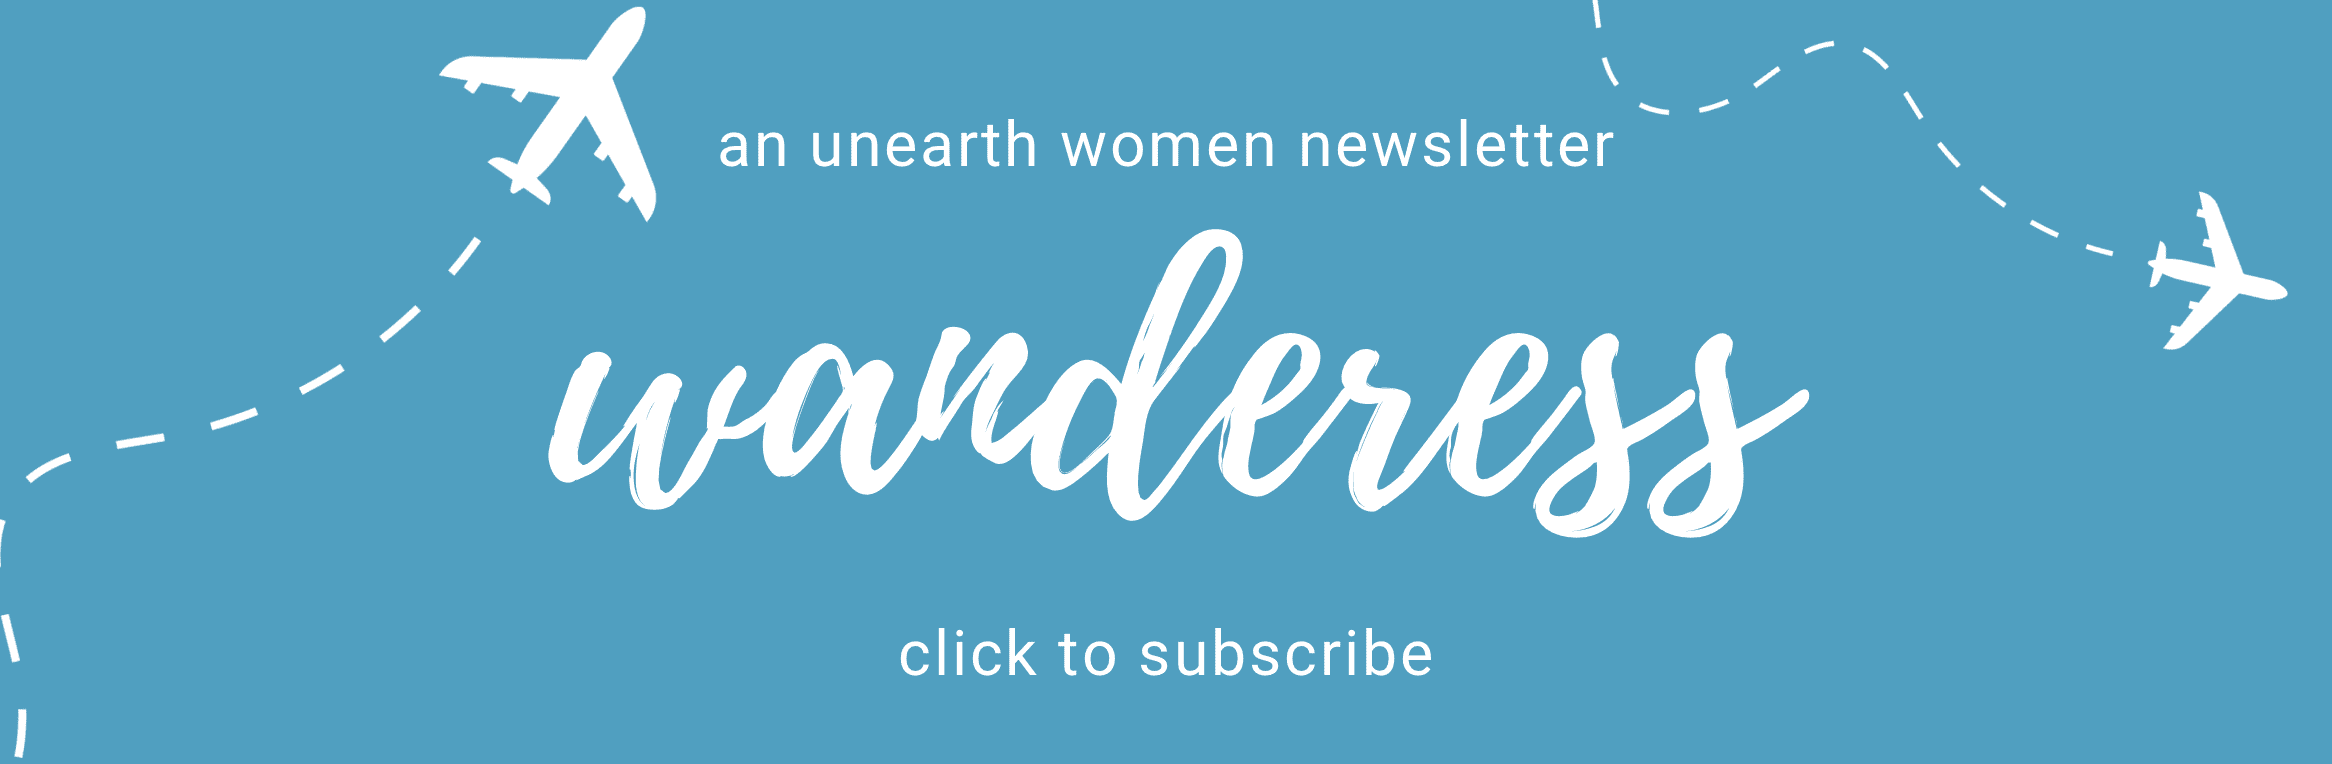 Wanderess a travel newsletter from Unearth Women